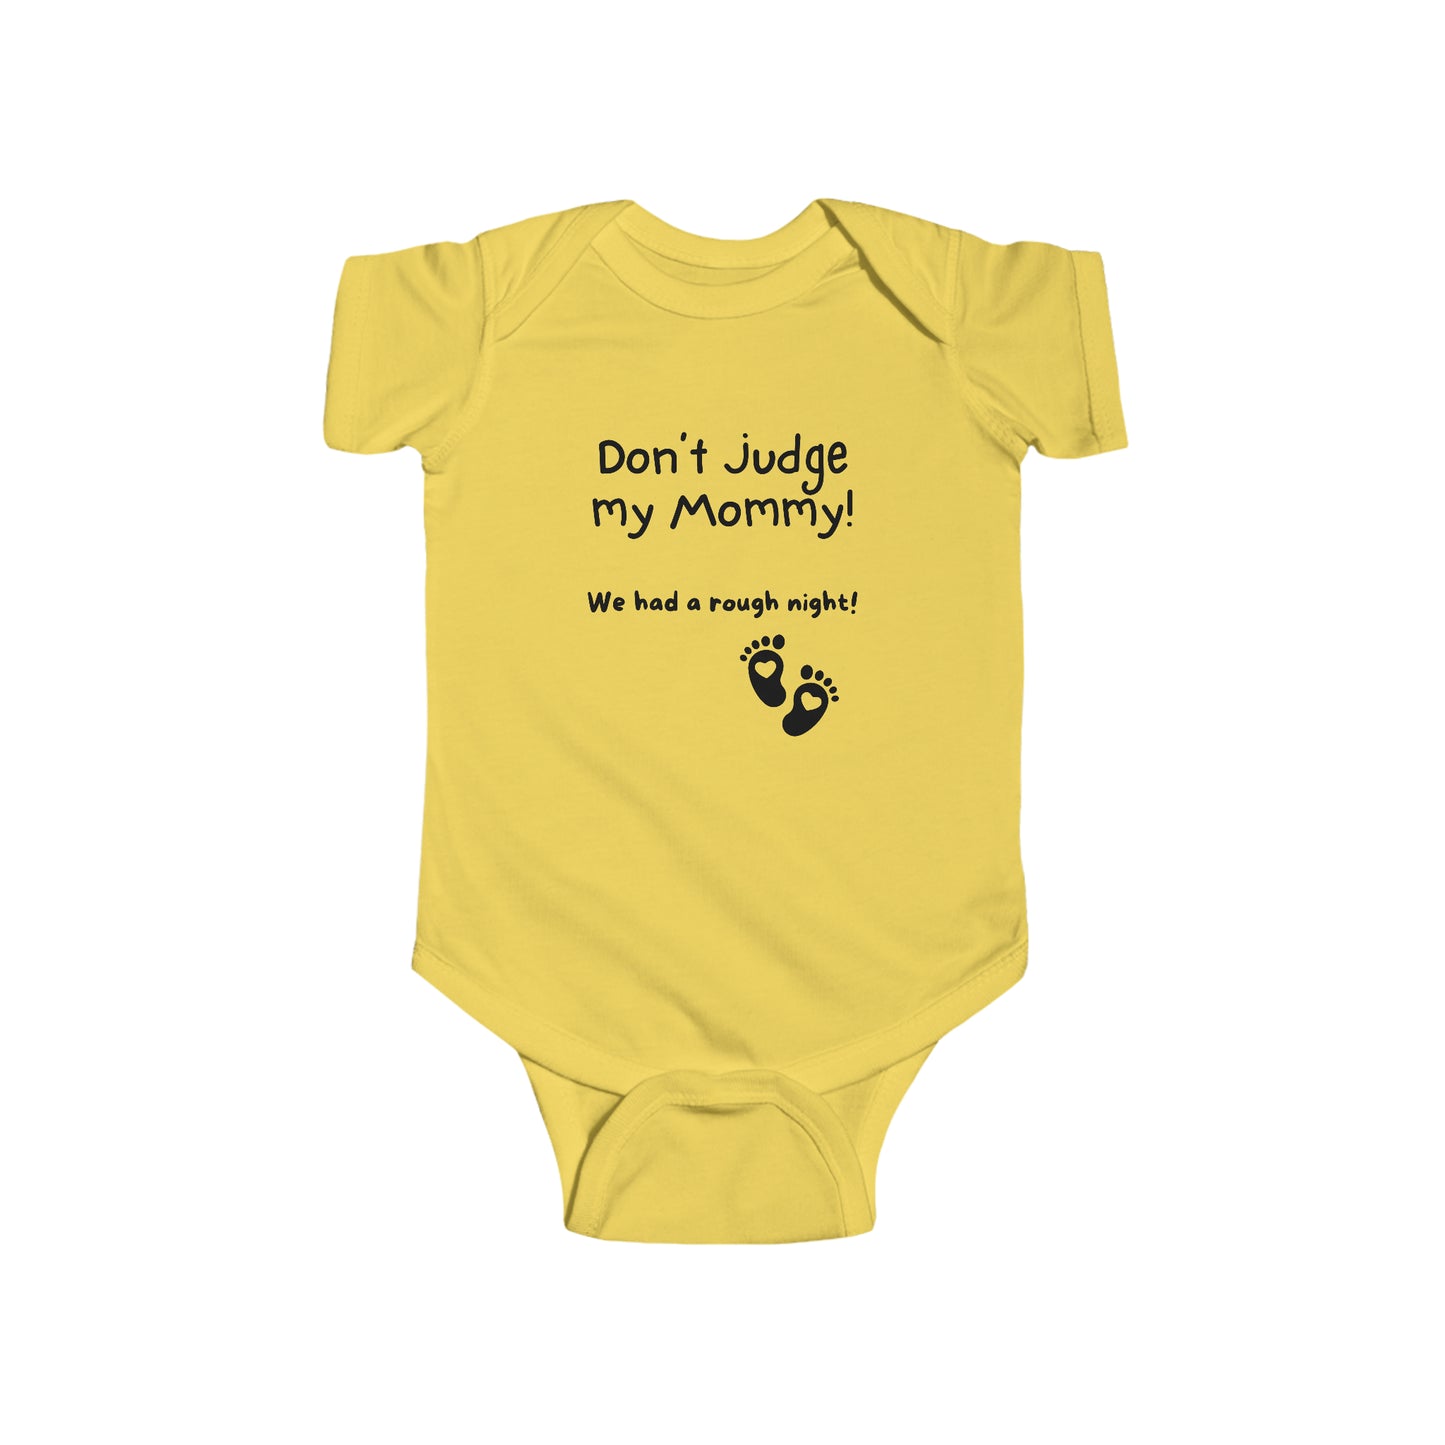 Don't Judge My Mommy - Infant Fine Jersey Bodysuit